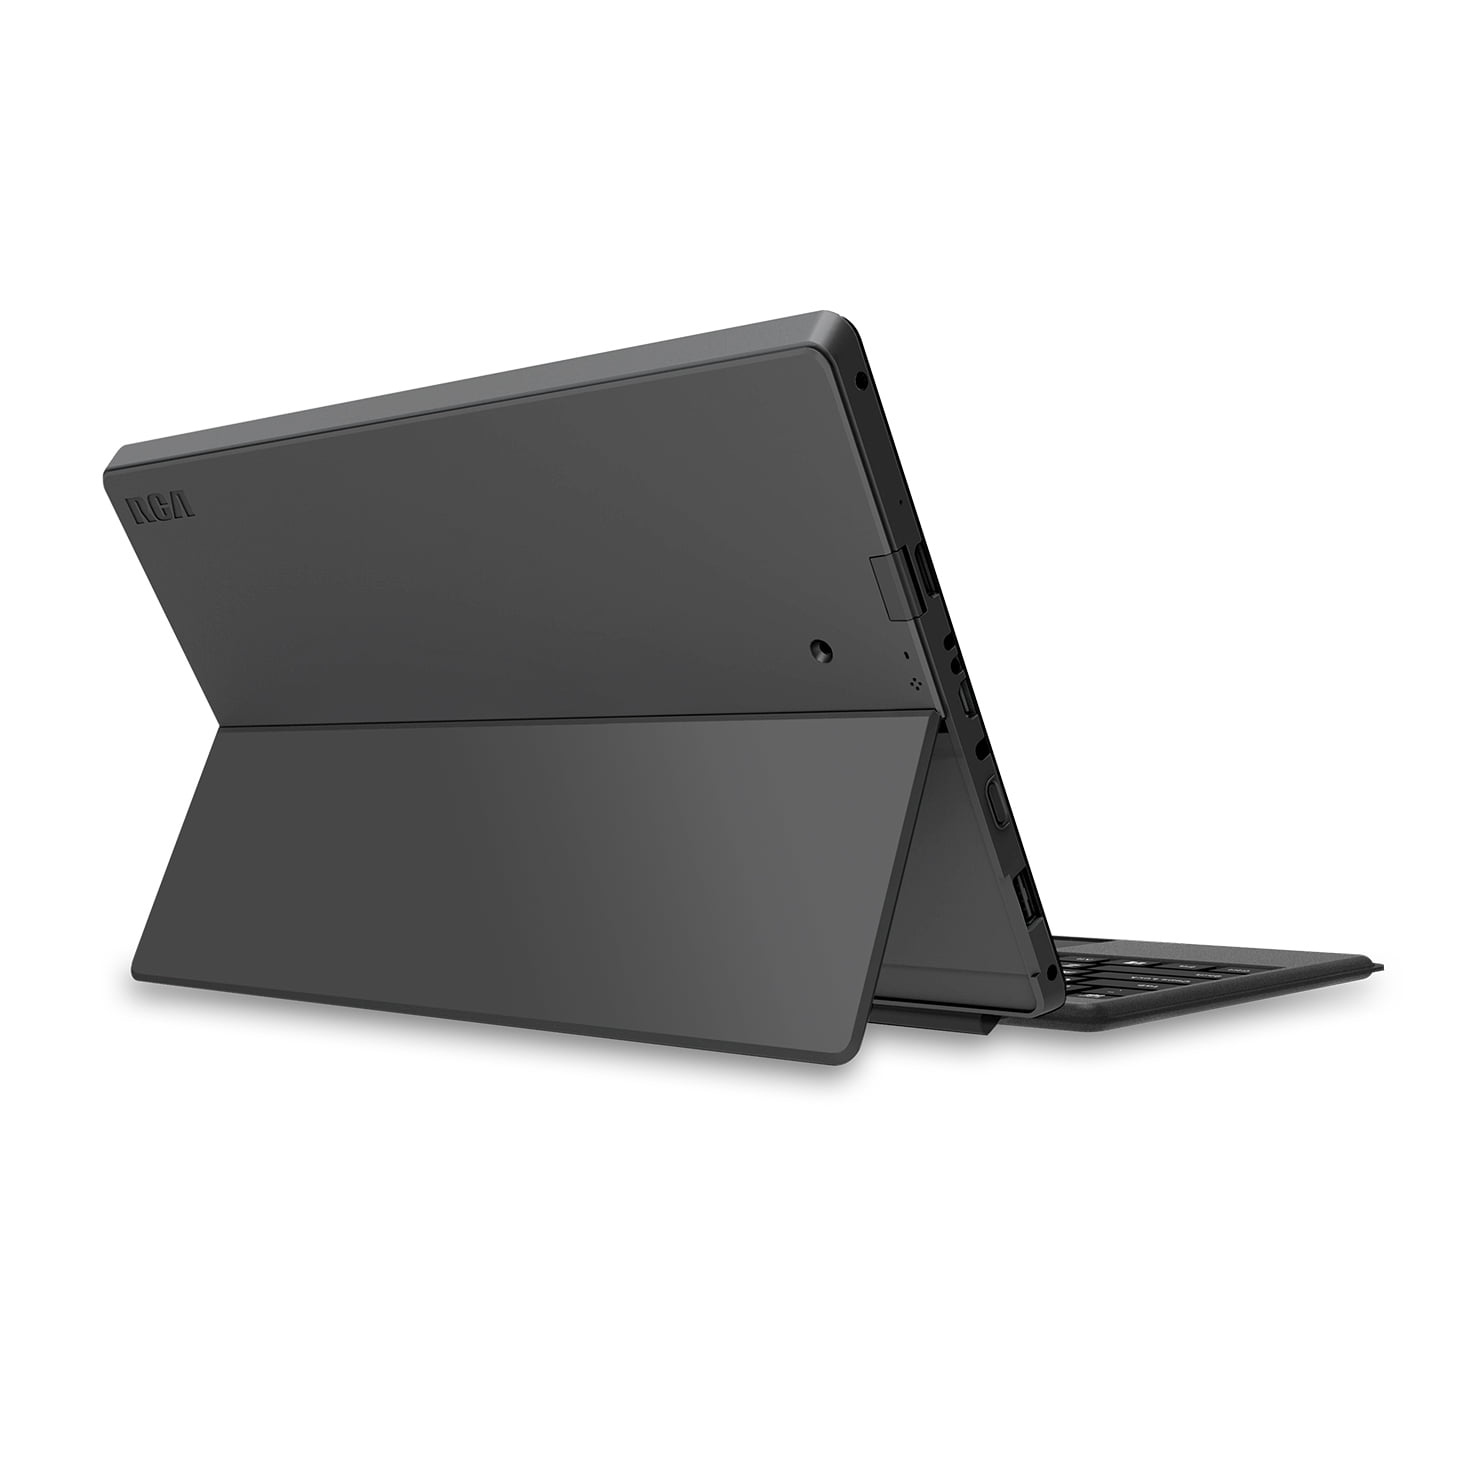 Rca Cambio 10 1 2 In 1 Windows Tablet Keyboard Charcoal Walmart Com Walmart Com - smoking negro roblox